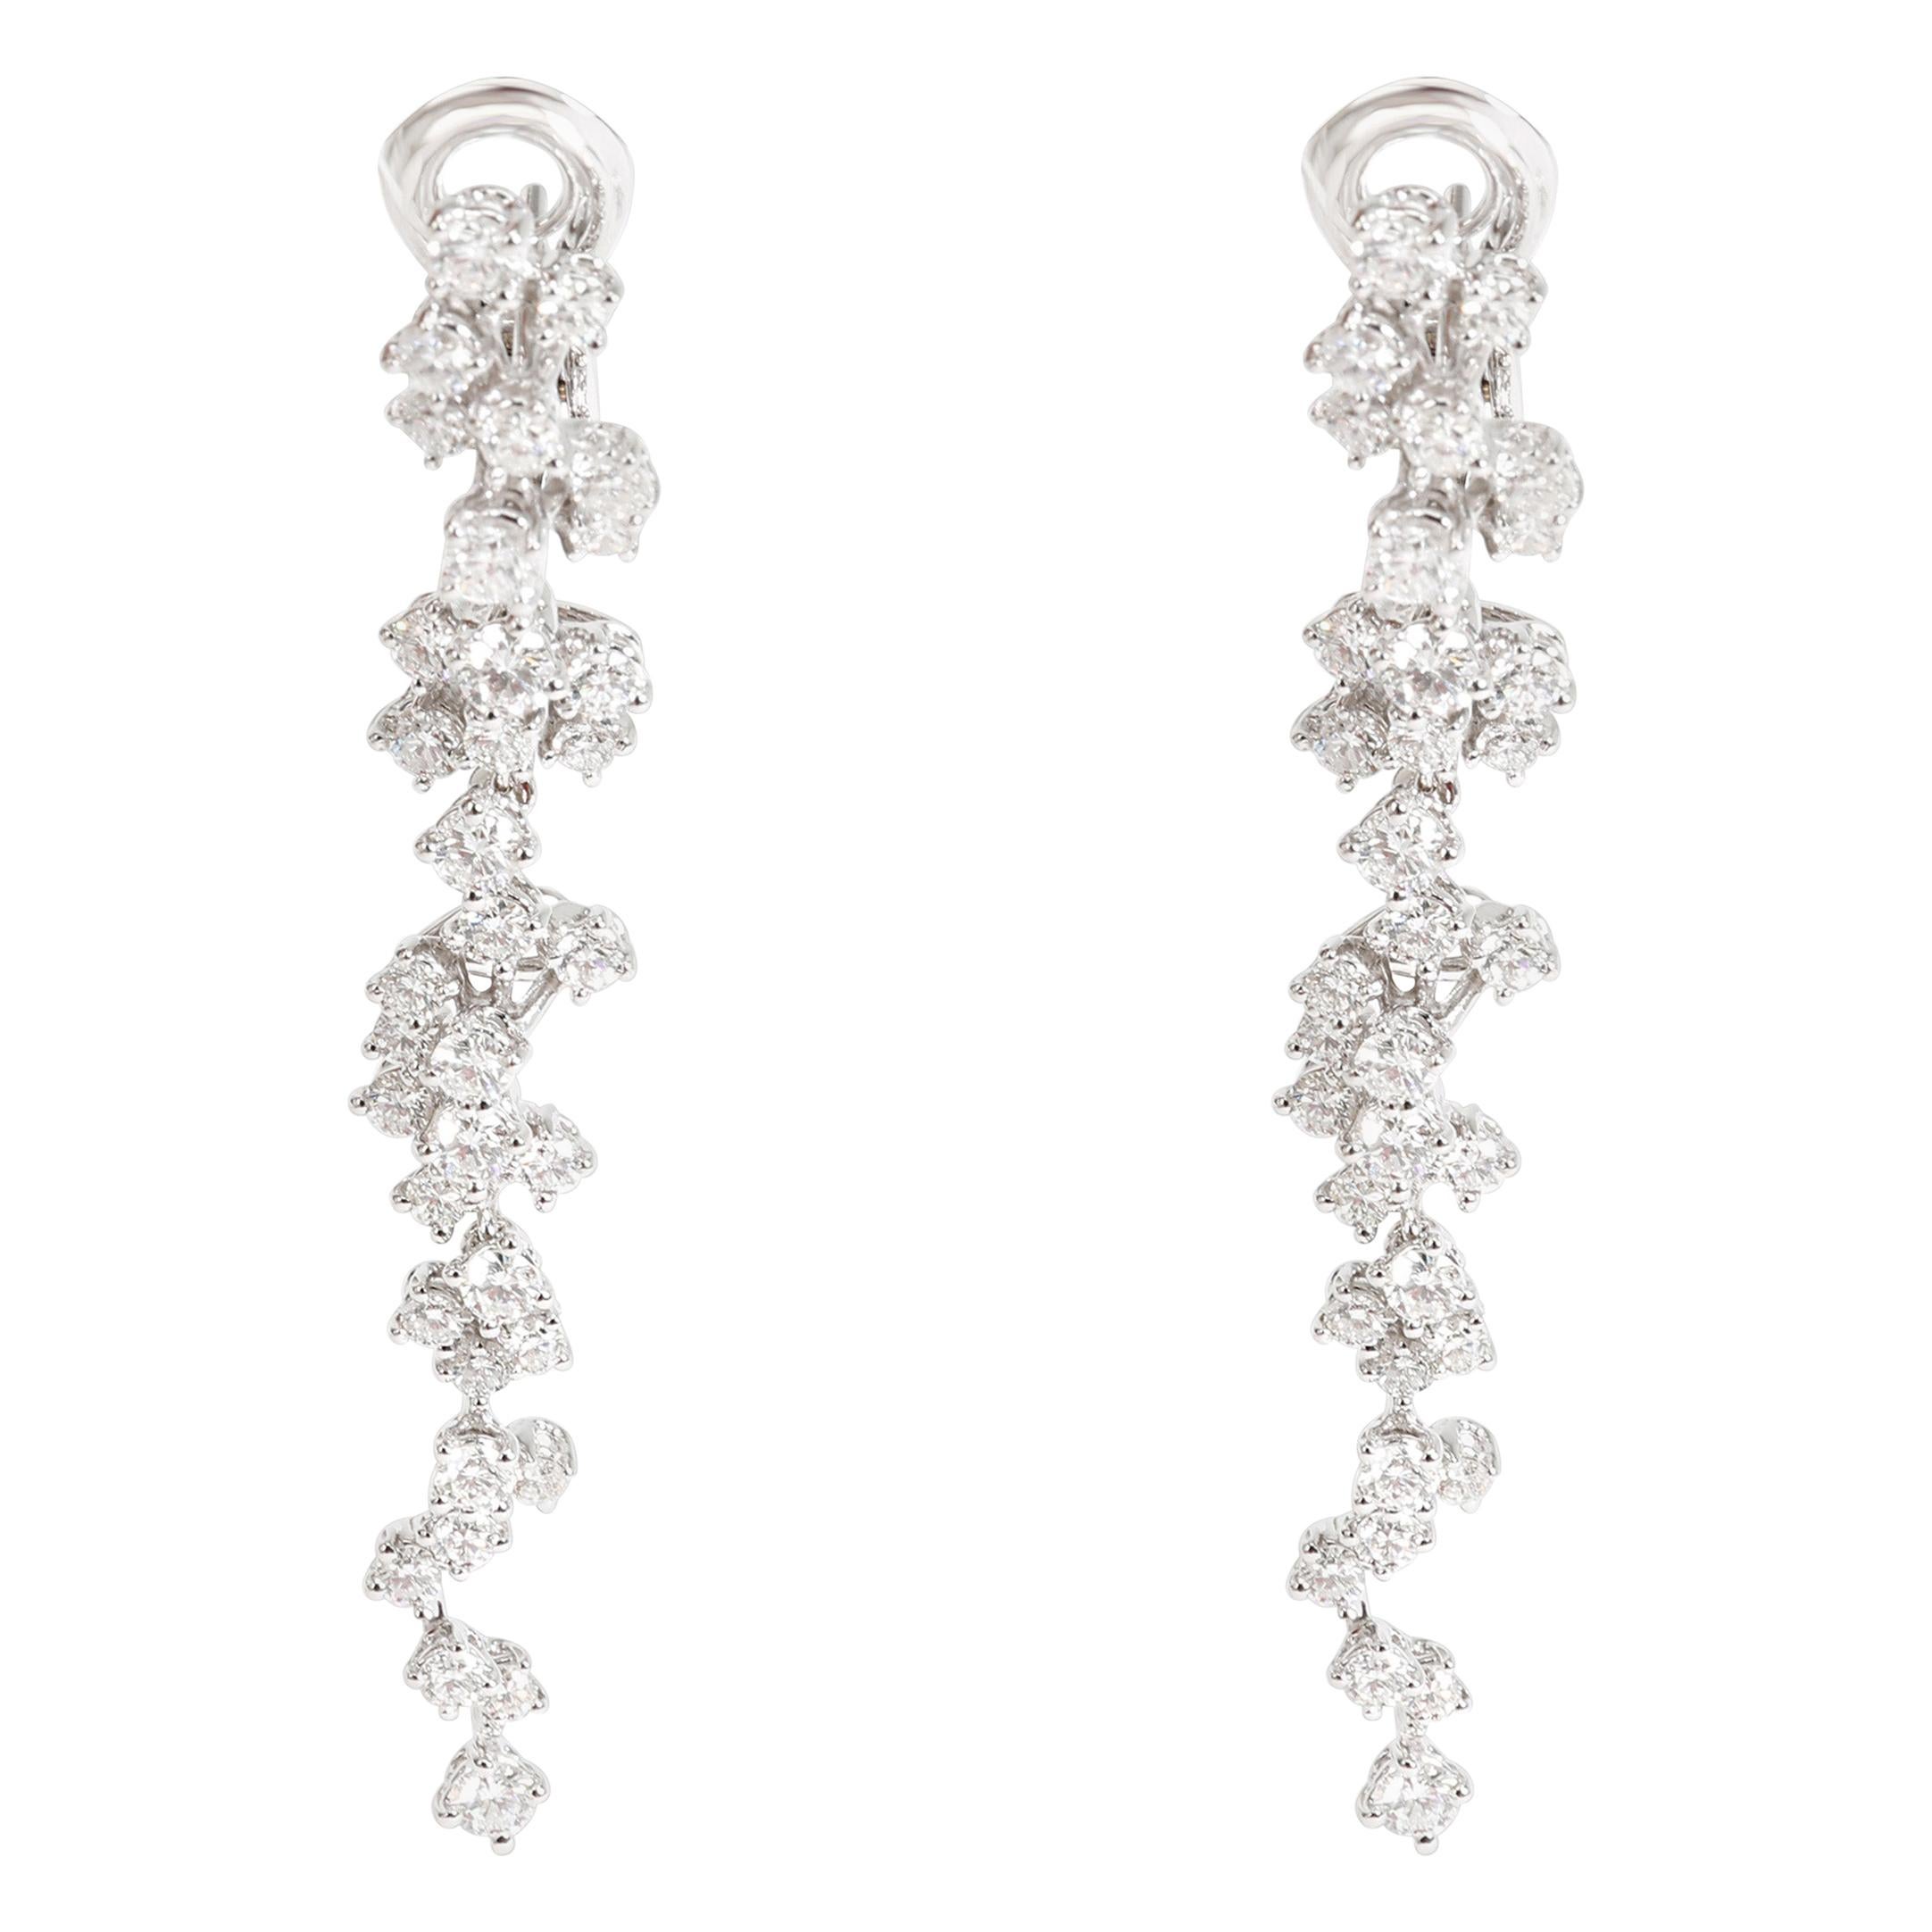 Fred Cascading Diamonds Dangle Earrings in 18 Karat White Gold 4.13 Carat